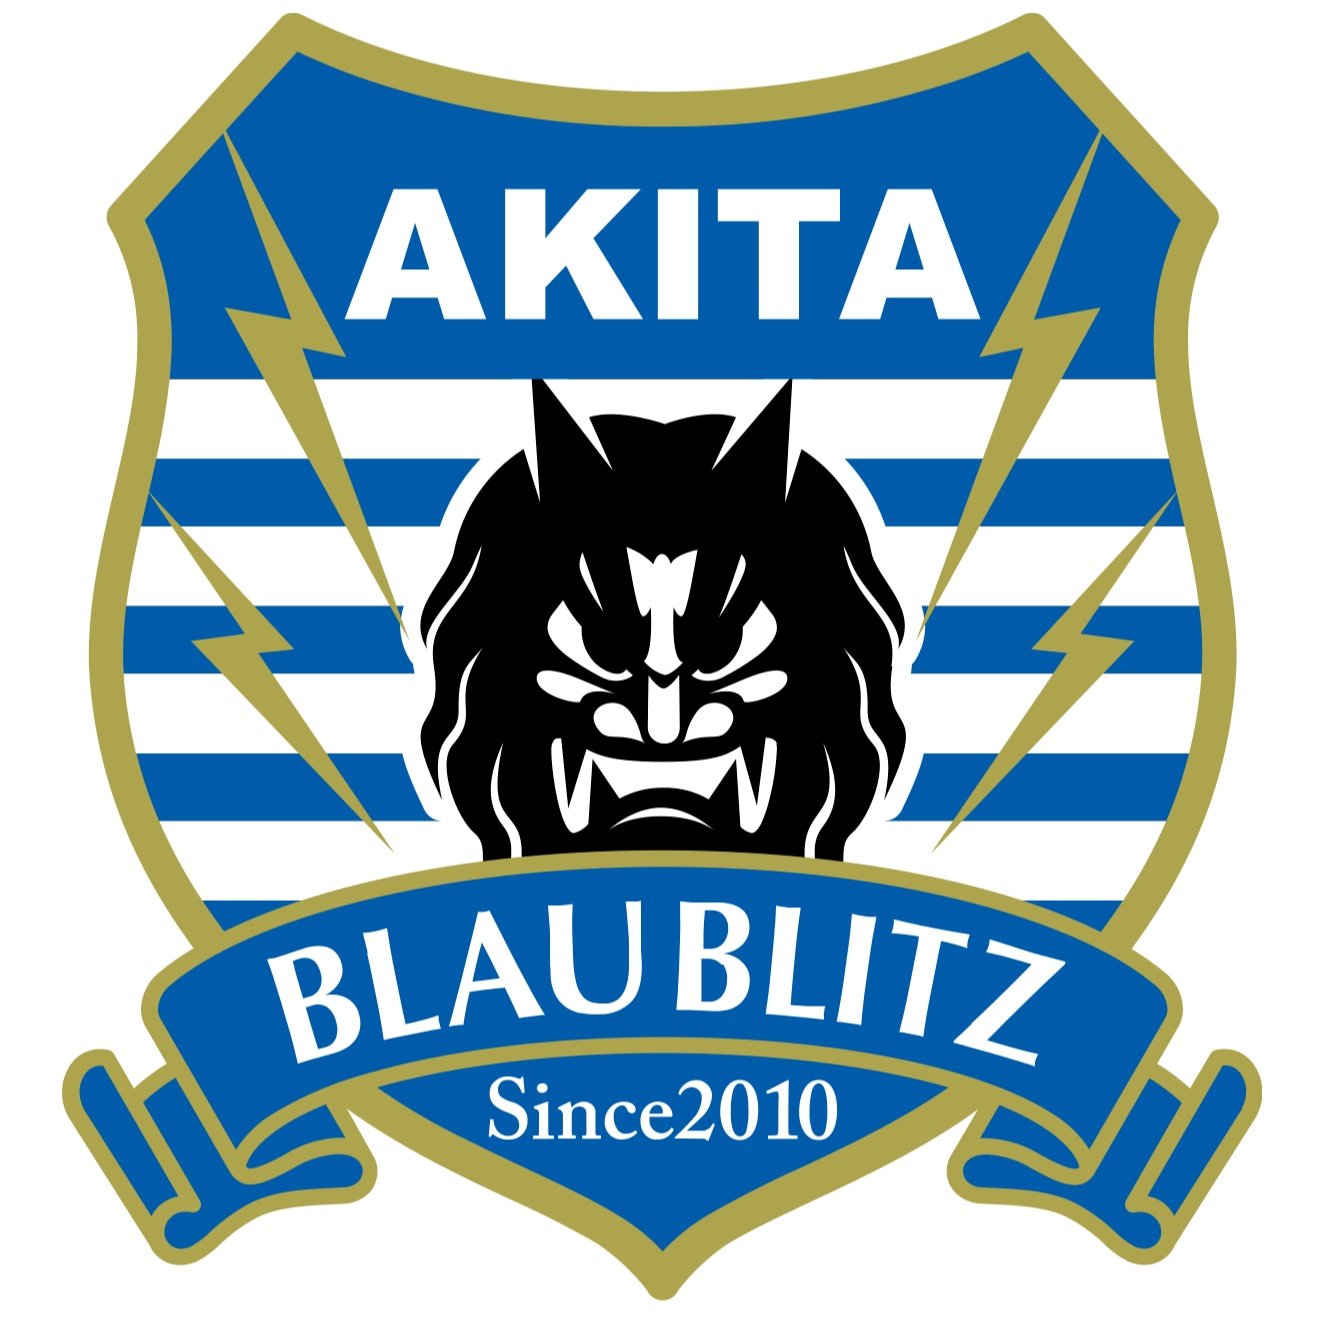 Escudo del Blaublitz Akita